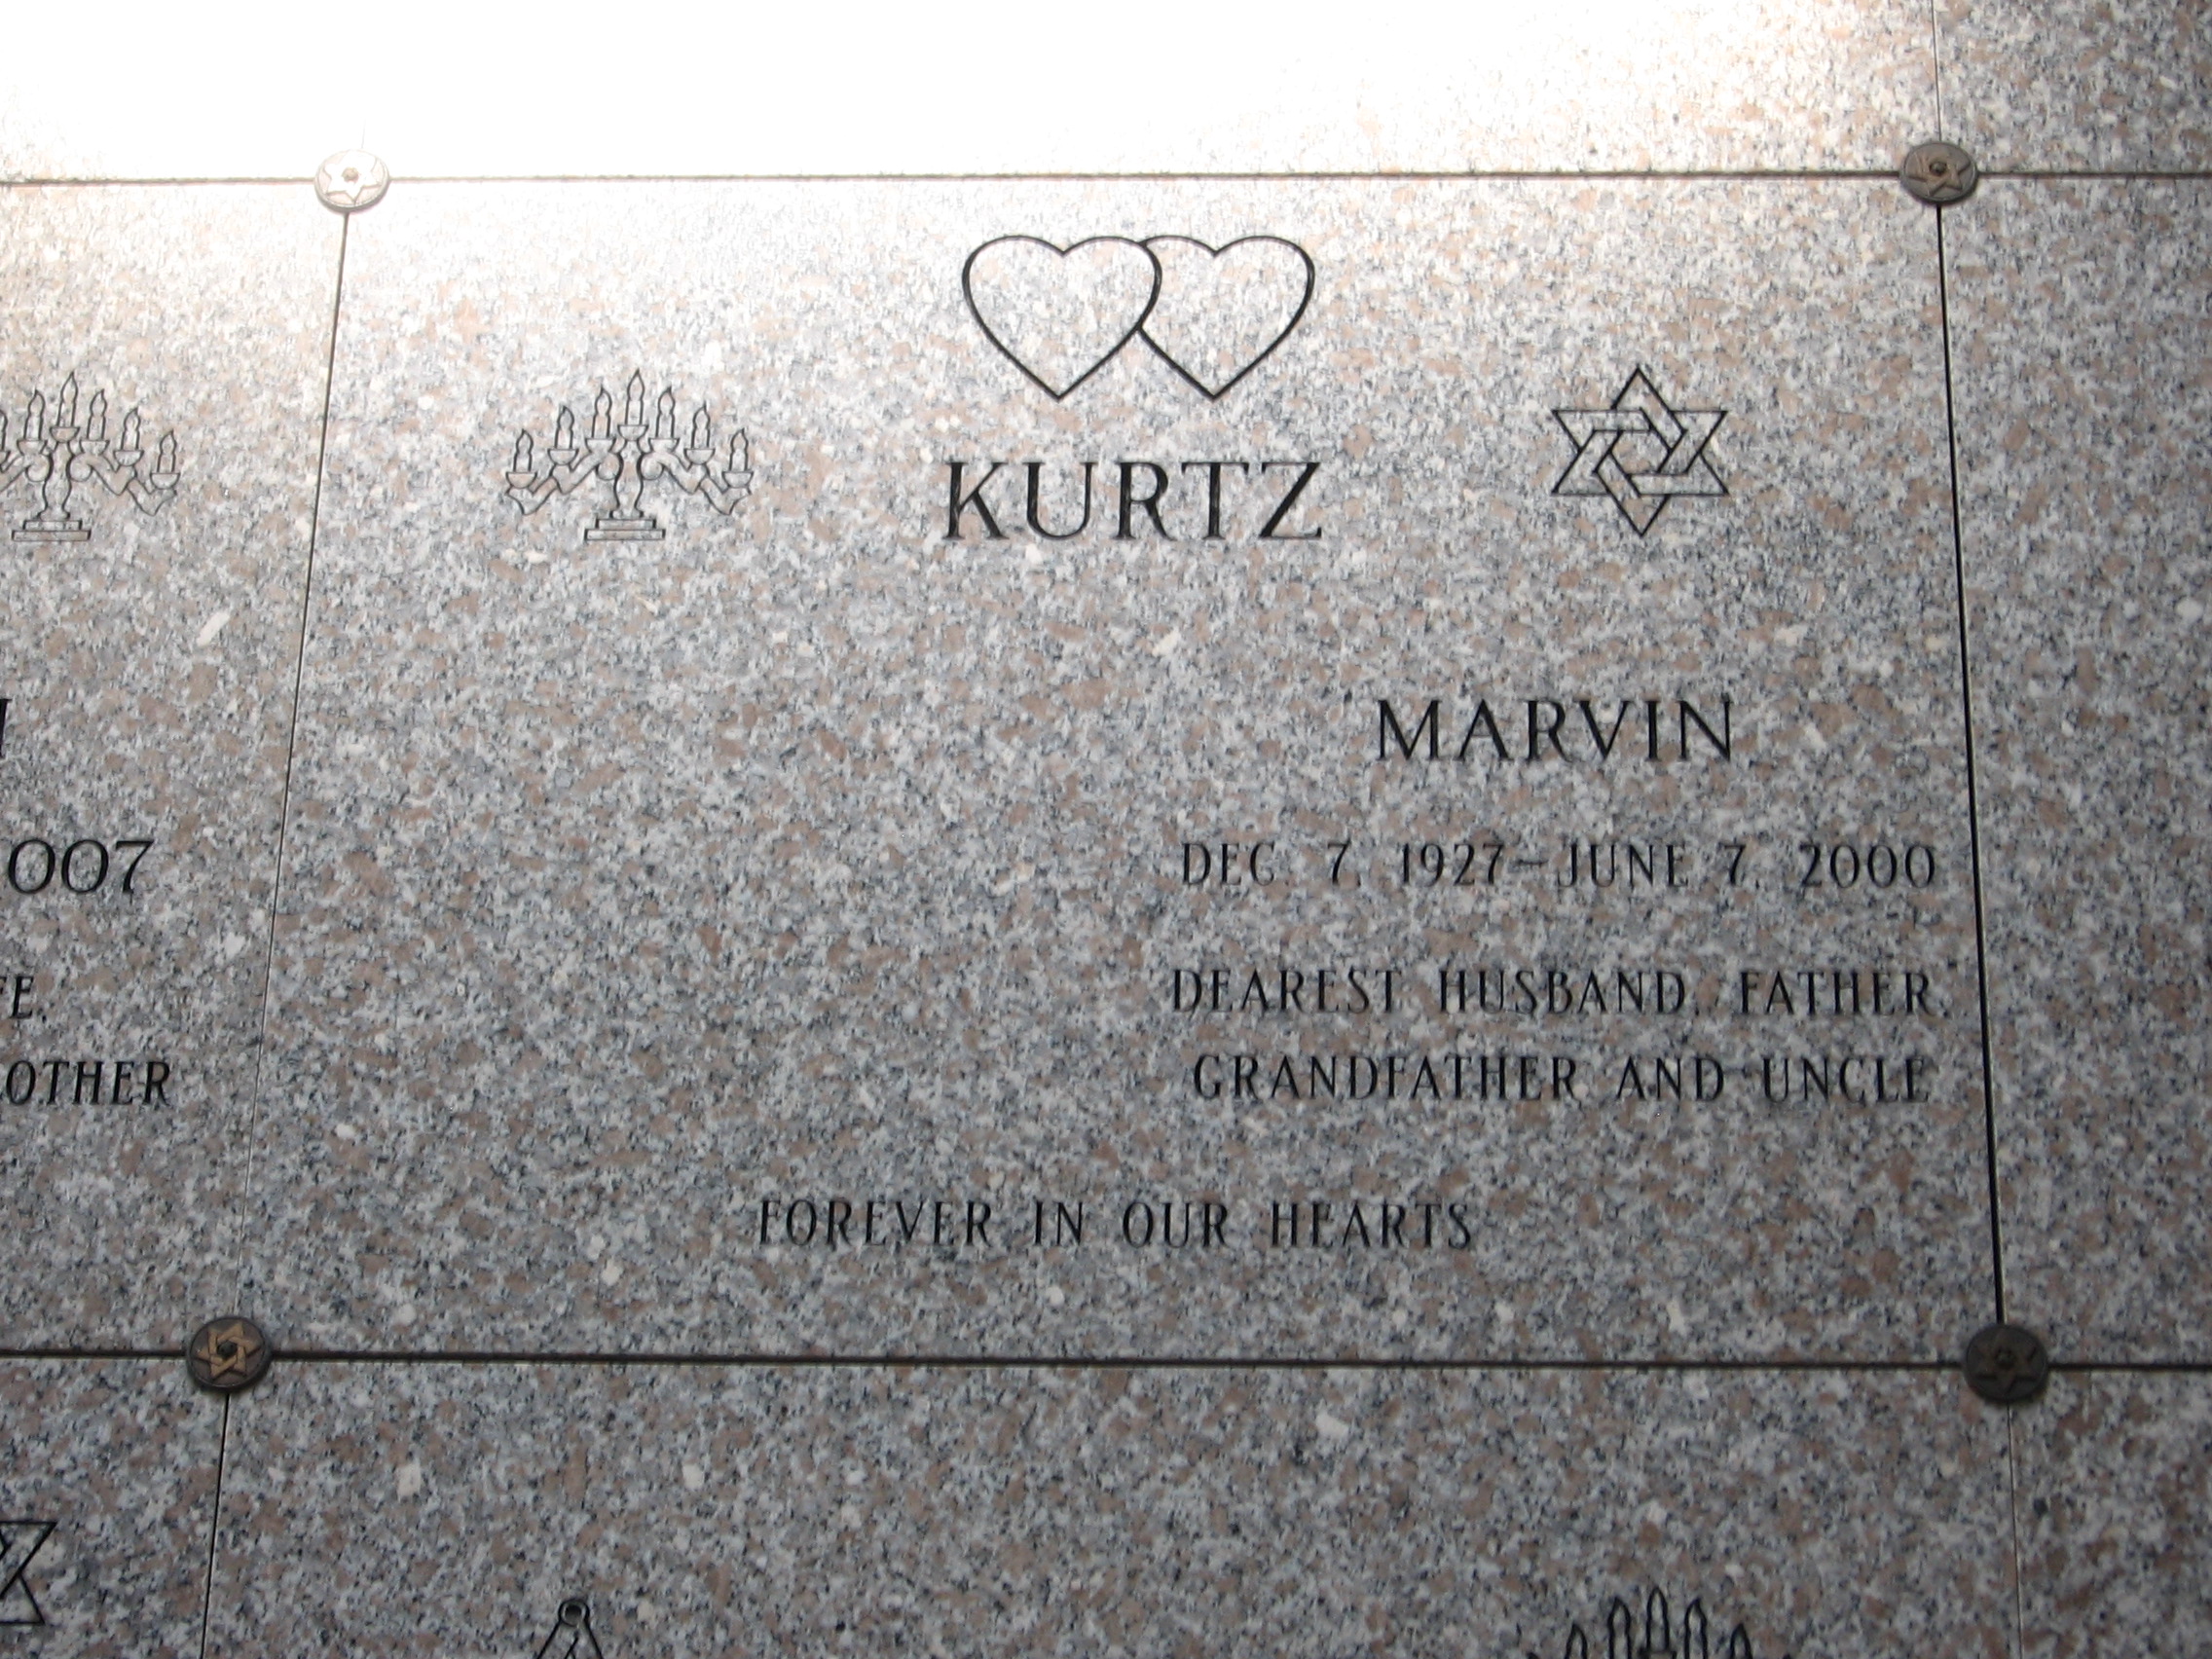 Marvin Kurtz